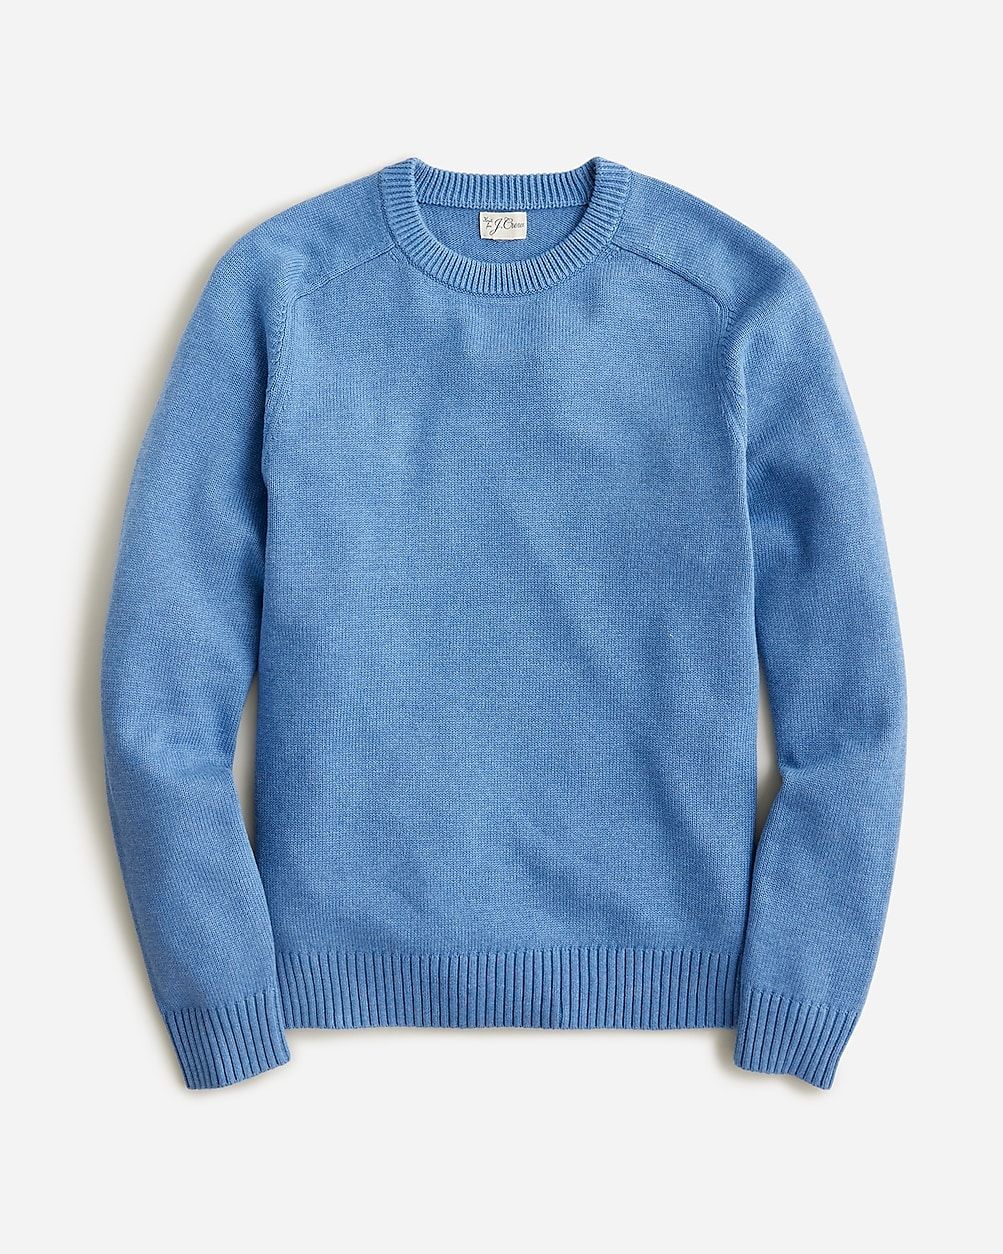 Heritage cotton crewneck sweater | J.Crew US